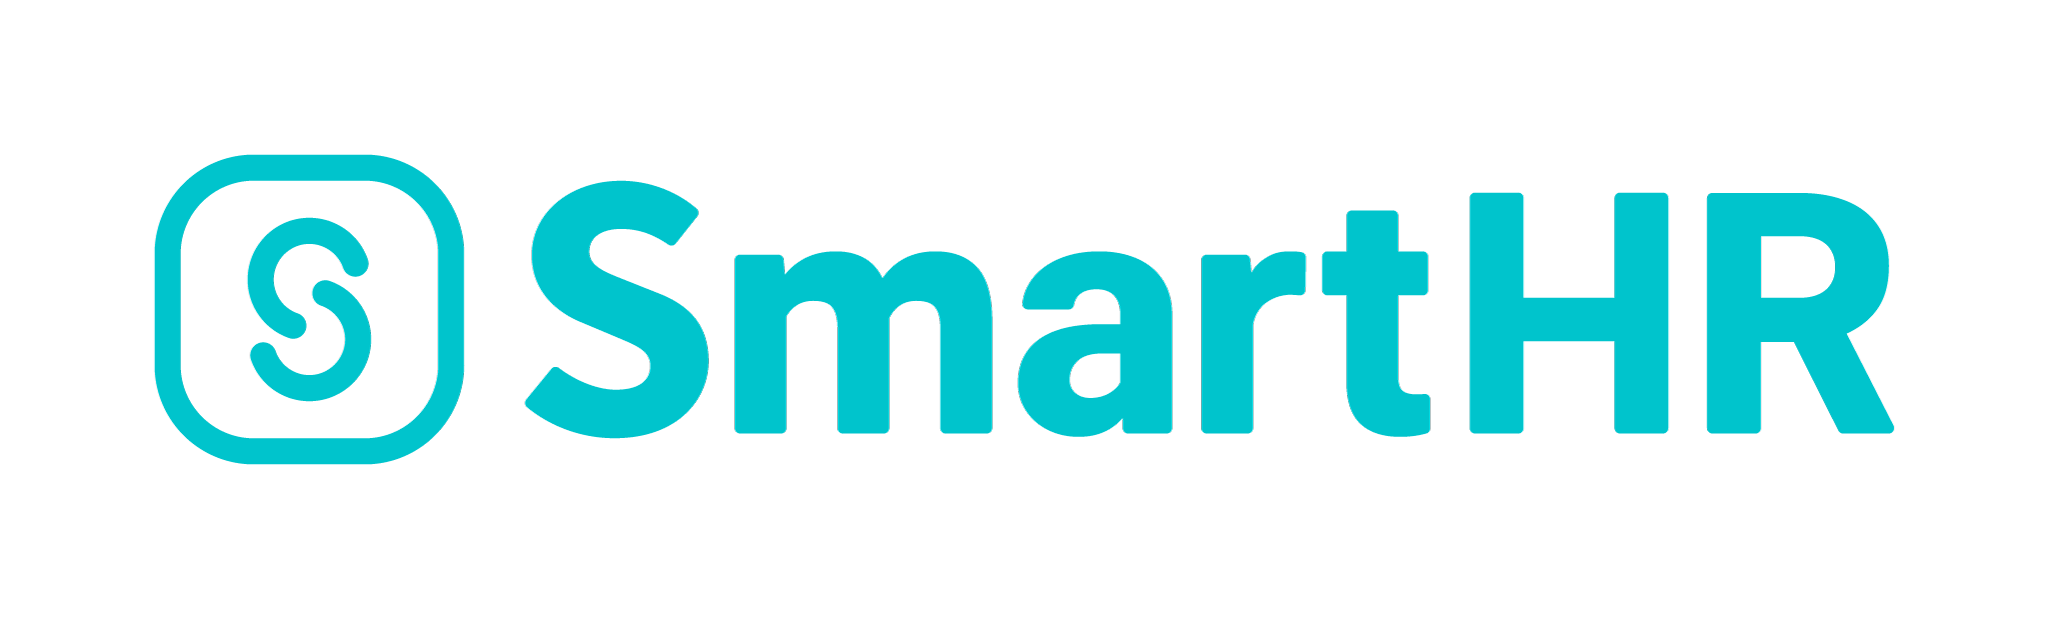 SmartHR_Logo